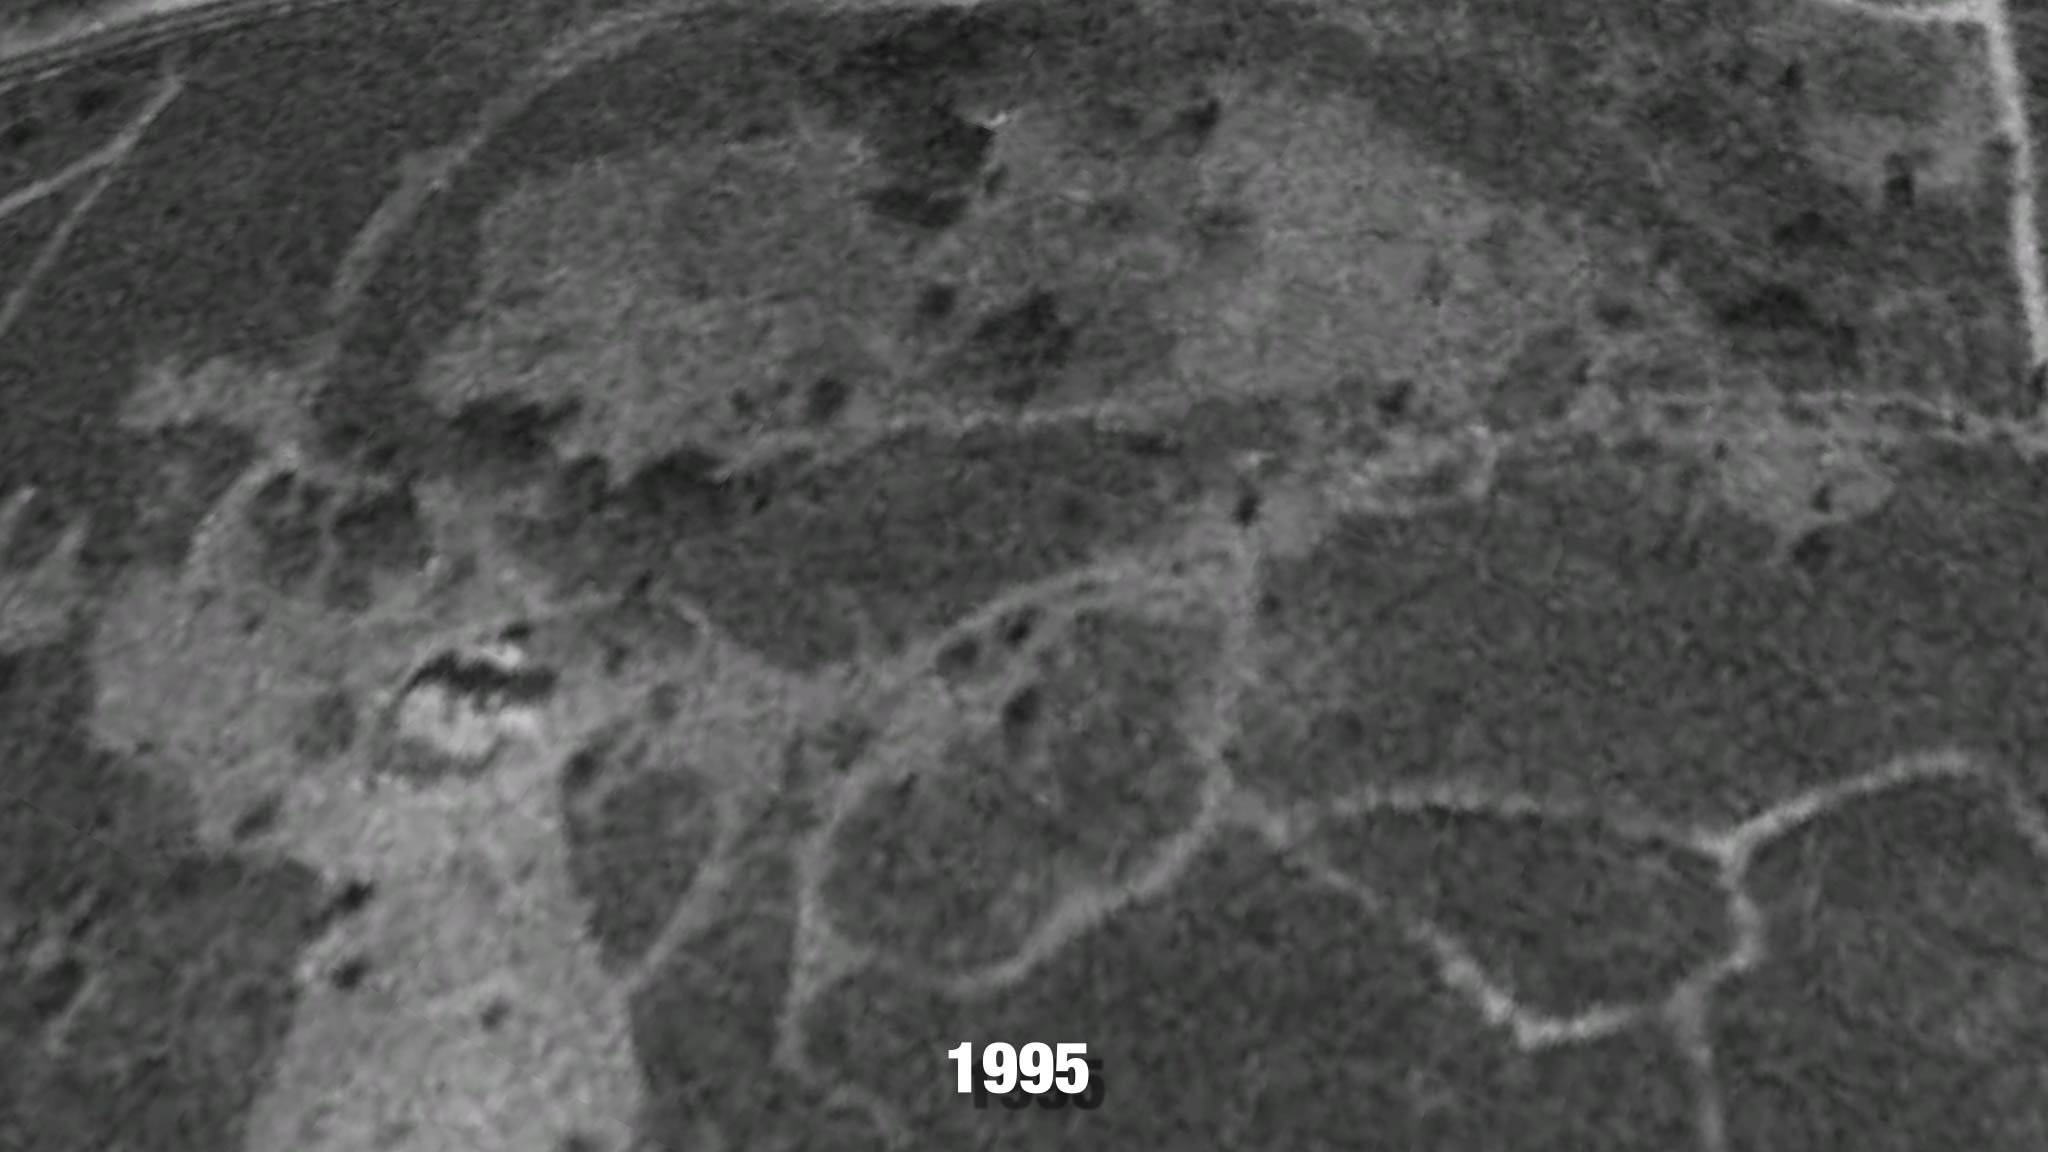 Martha's Vineyard satellite image from 1995 before mega-mansions